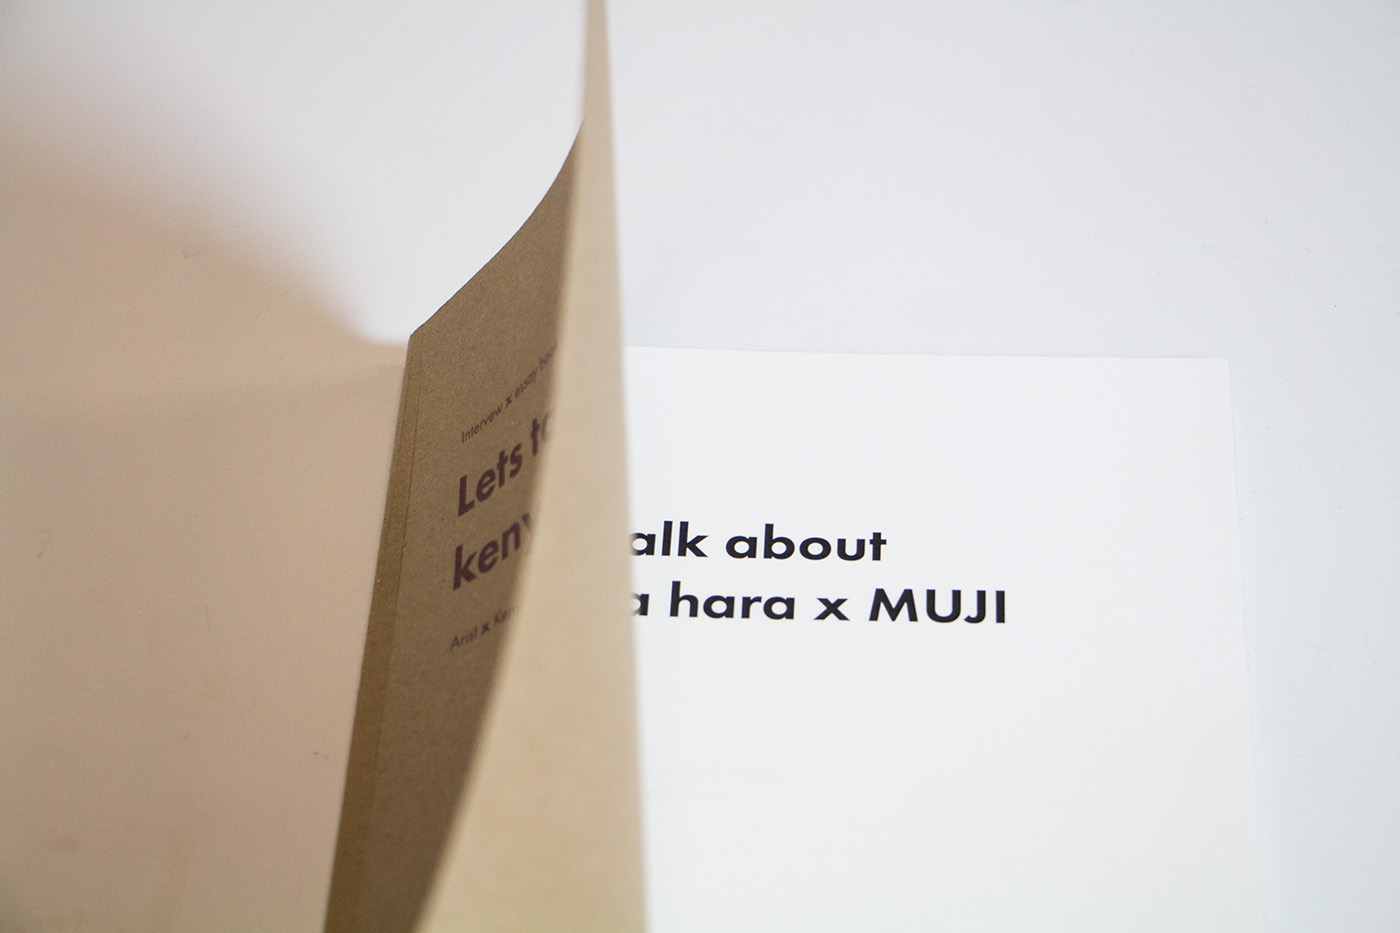 muji Kenya Hara publication design